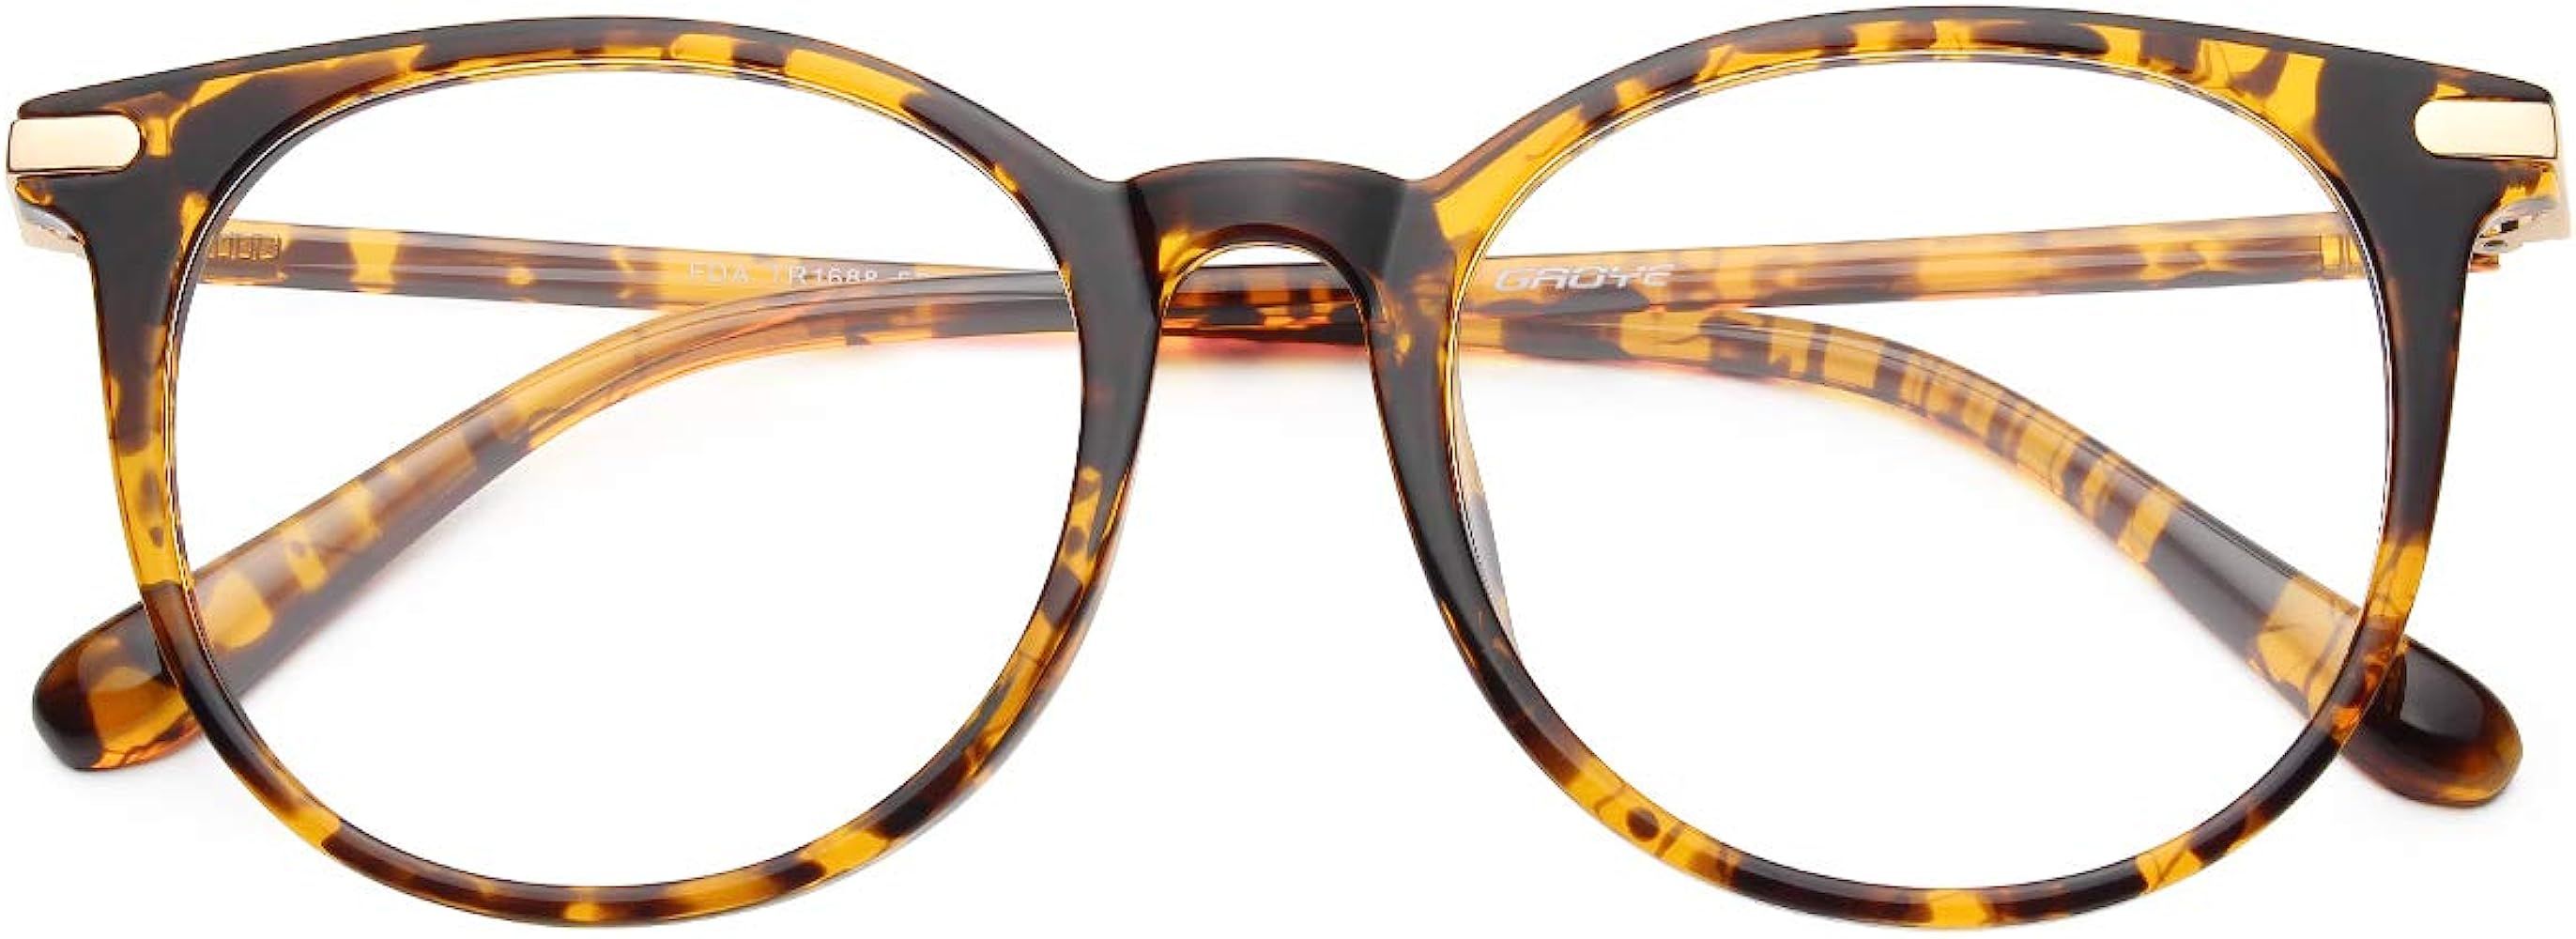 Gaoye Blue Light Blocking Glasses, Stylish Retro Round Frame Anti UV Ray Computer Gaming Eyeglass... | Amazon (US)